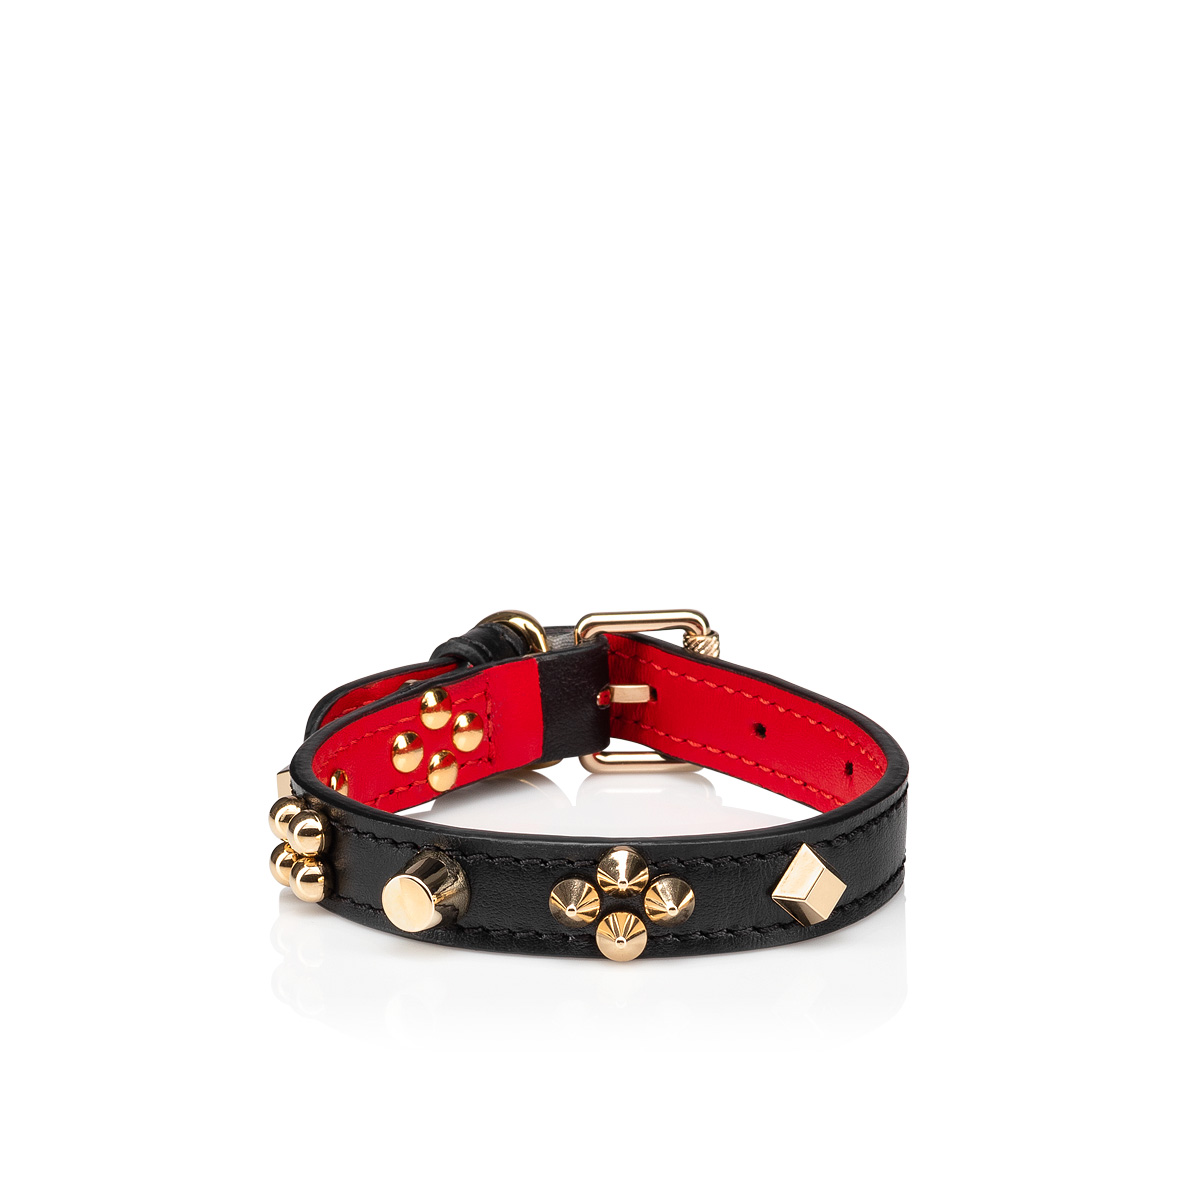 Louis Vuitton Dog Collar and Leash Set 100% Authentic!